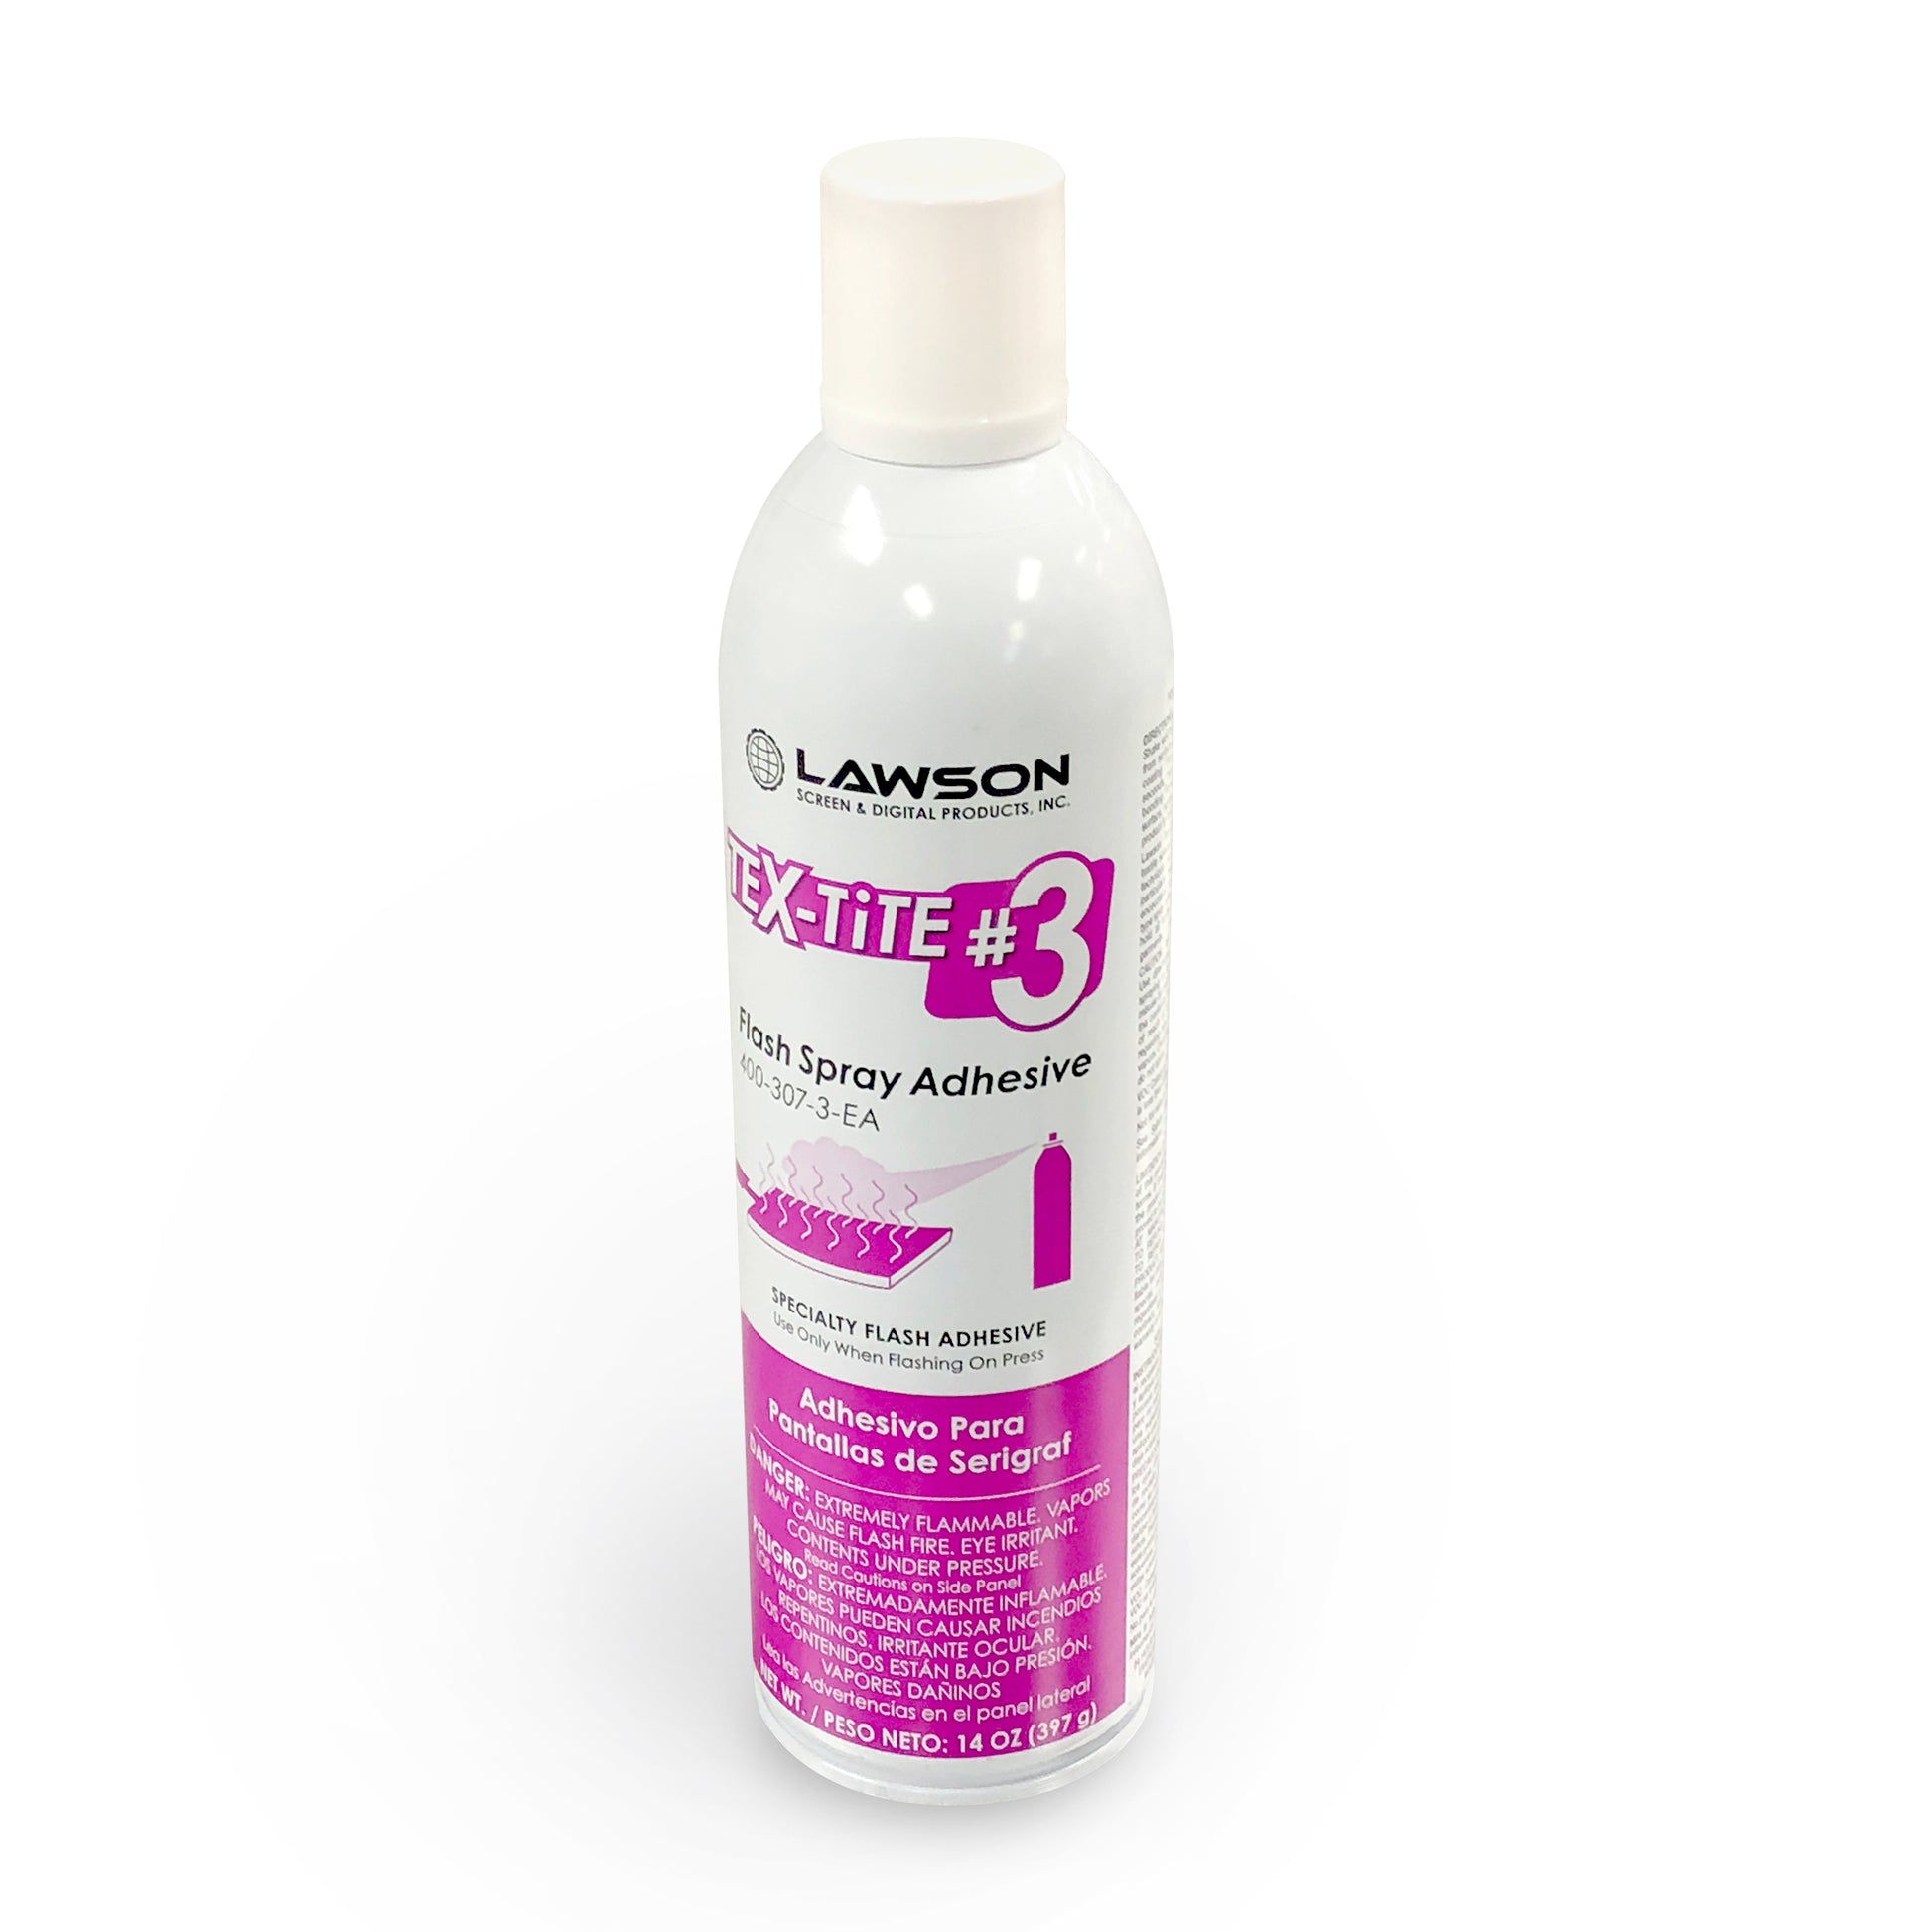 Tex-Tite #3 Flash Screen Printing Supply Platen Adhesive Spray